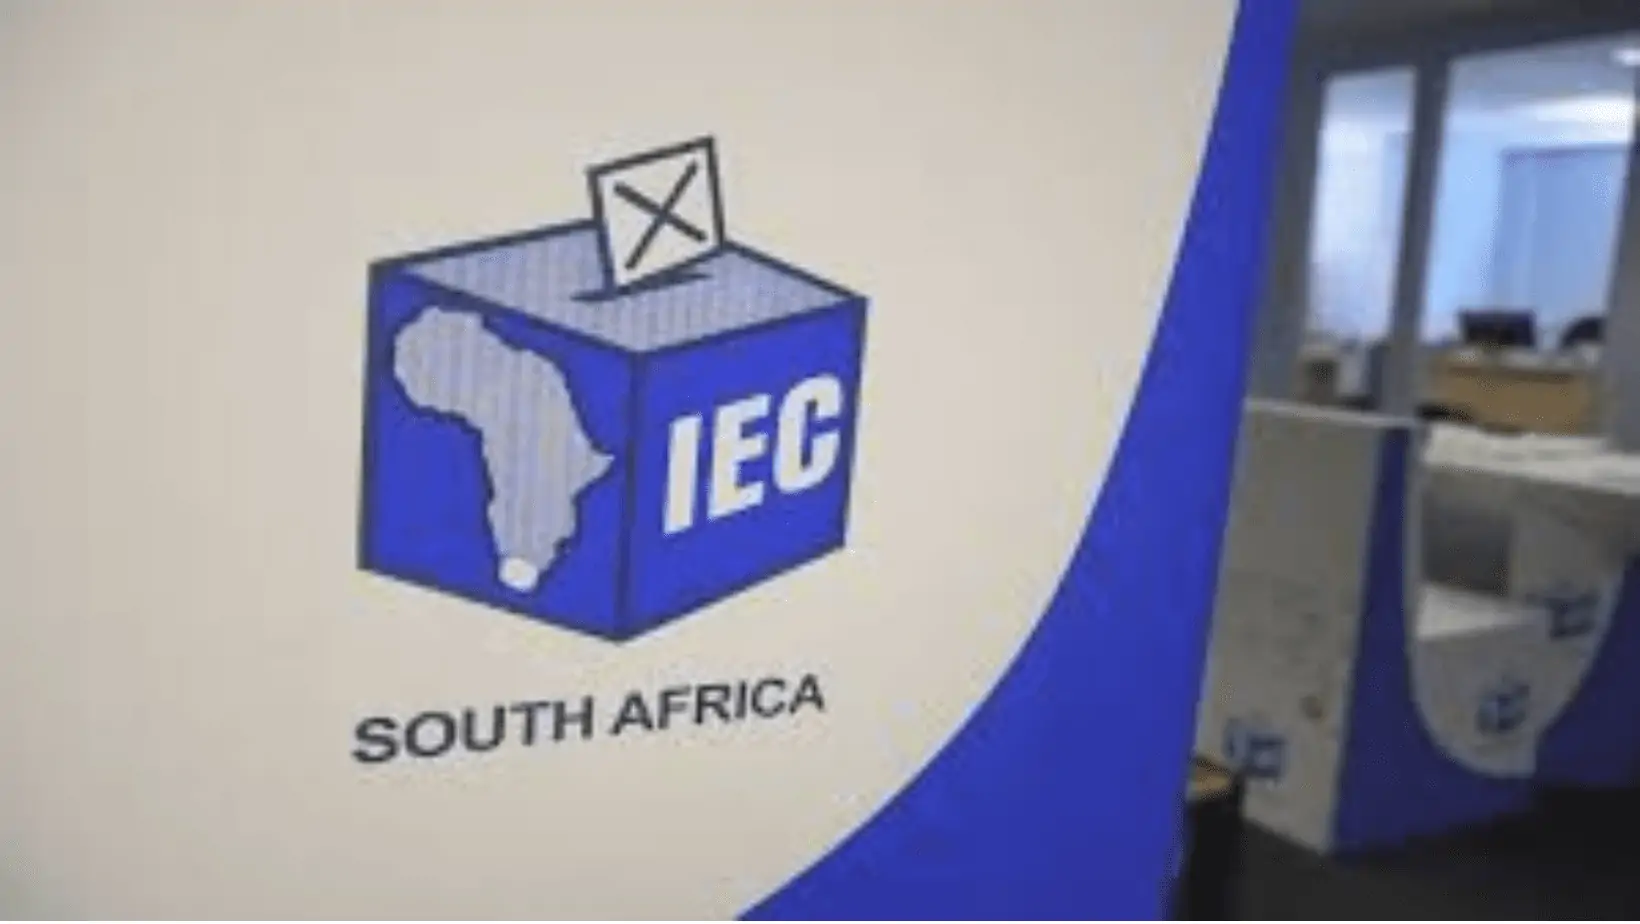 Eastern Cape’s Mbhashe Municipality Elects New Leaders